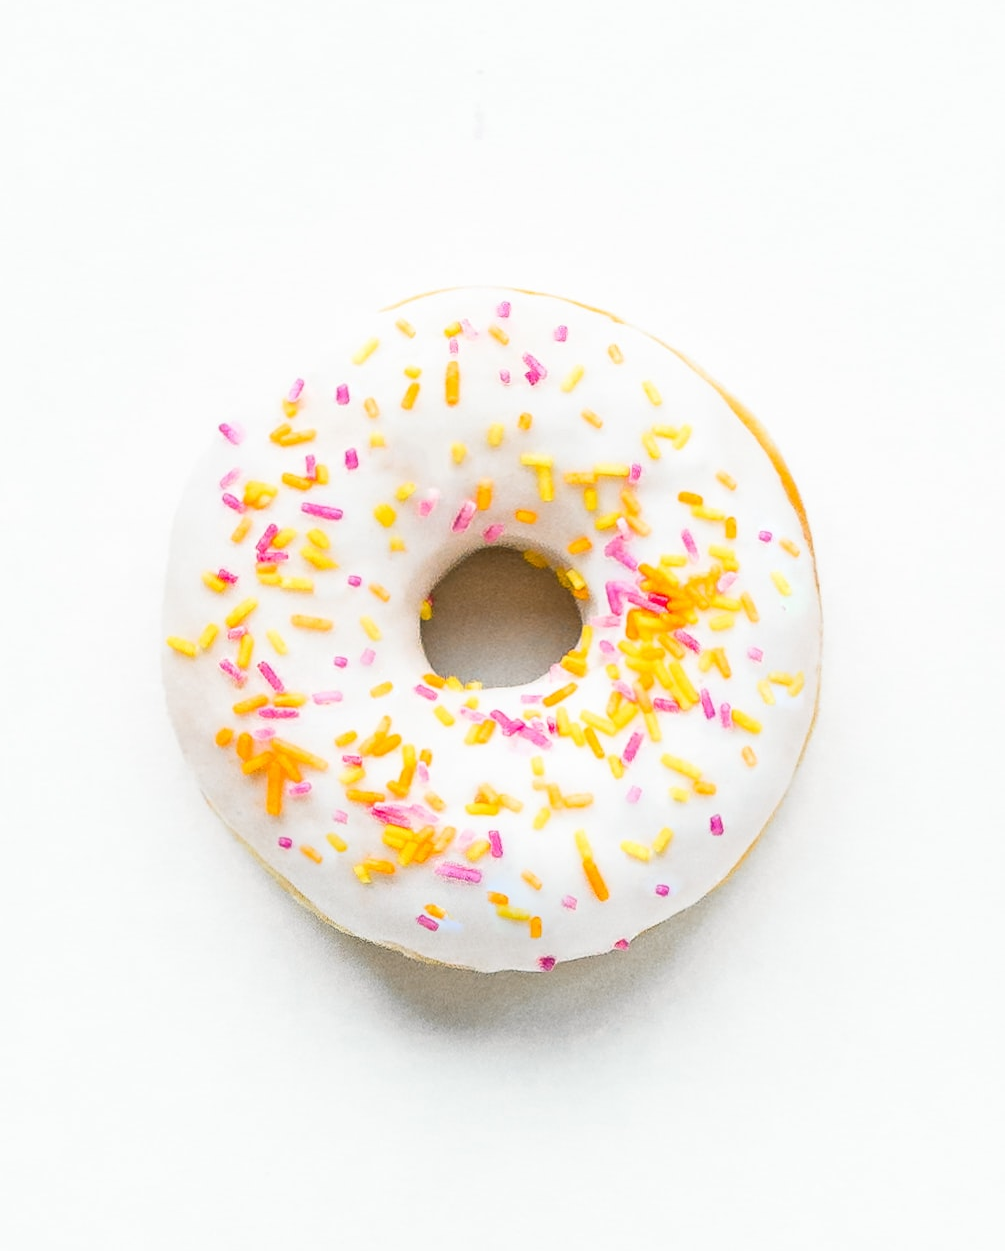 vanilla glaze donut with yellow, orange, and pink sprinkles